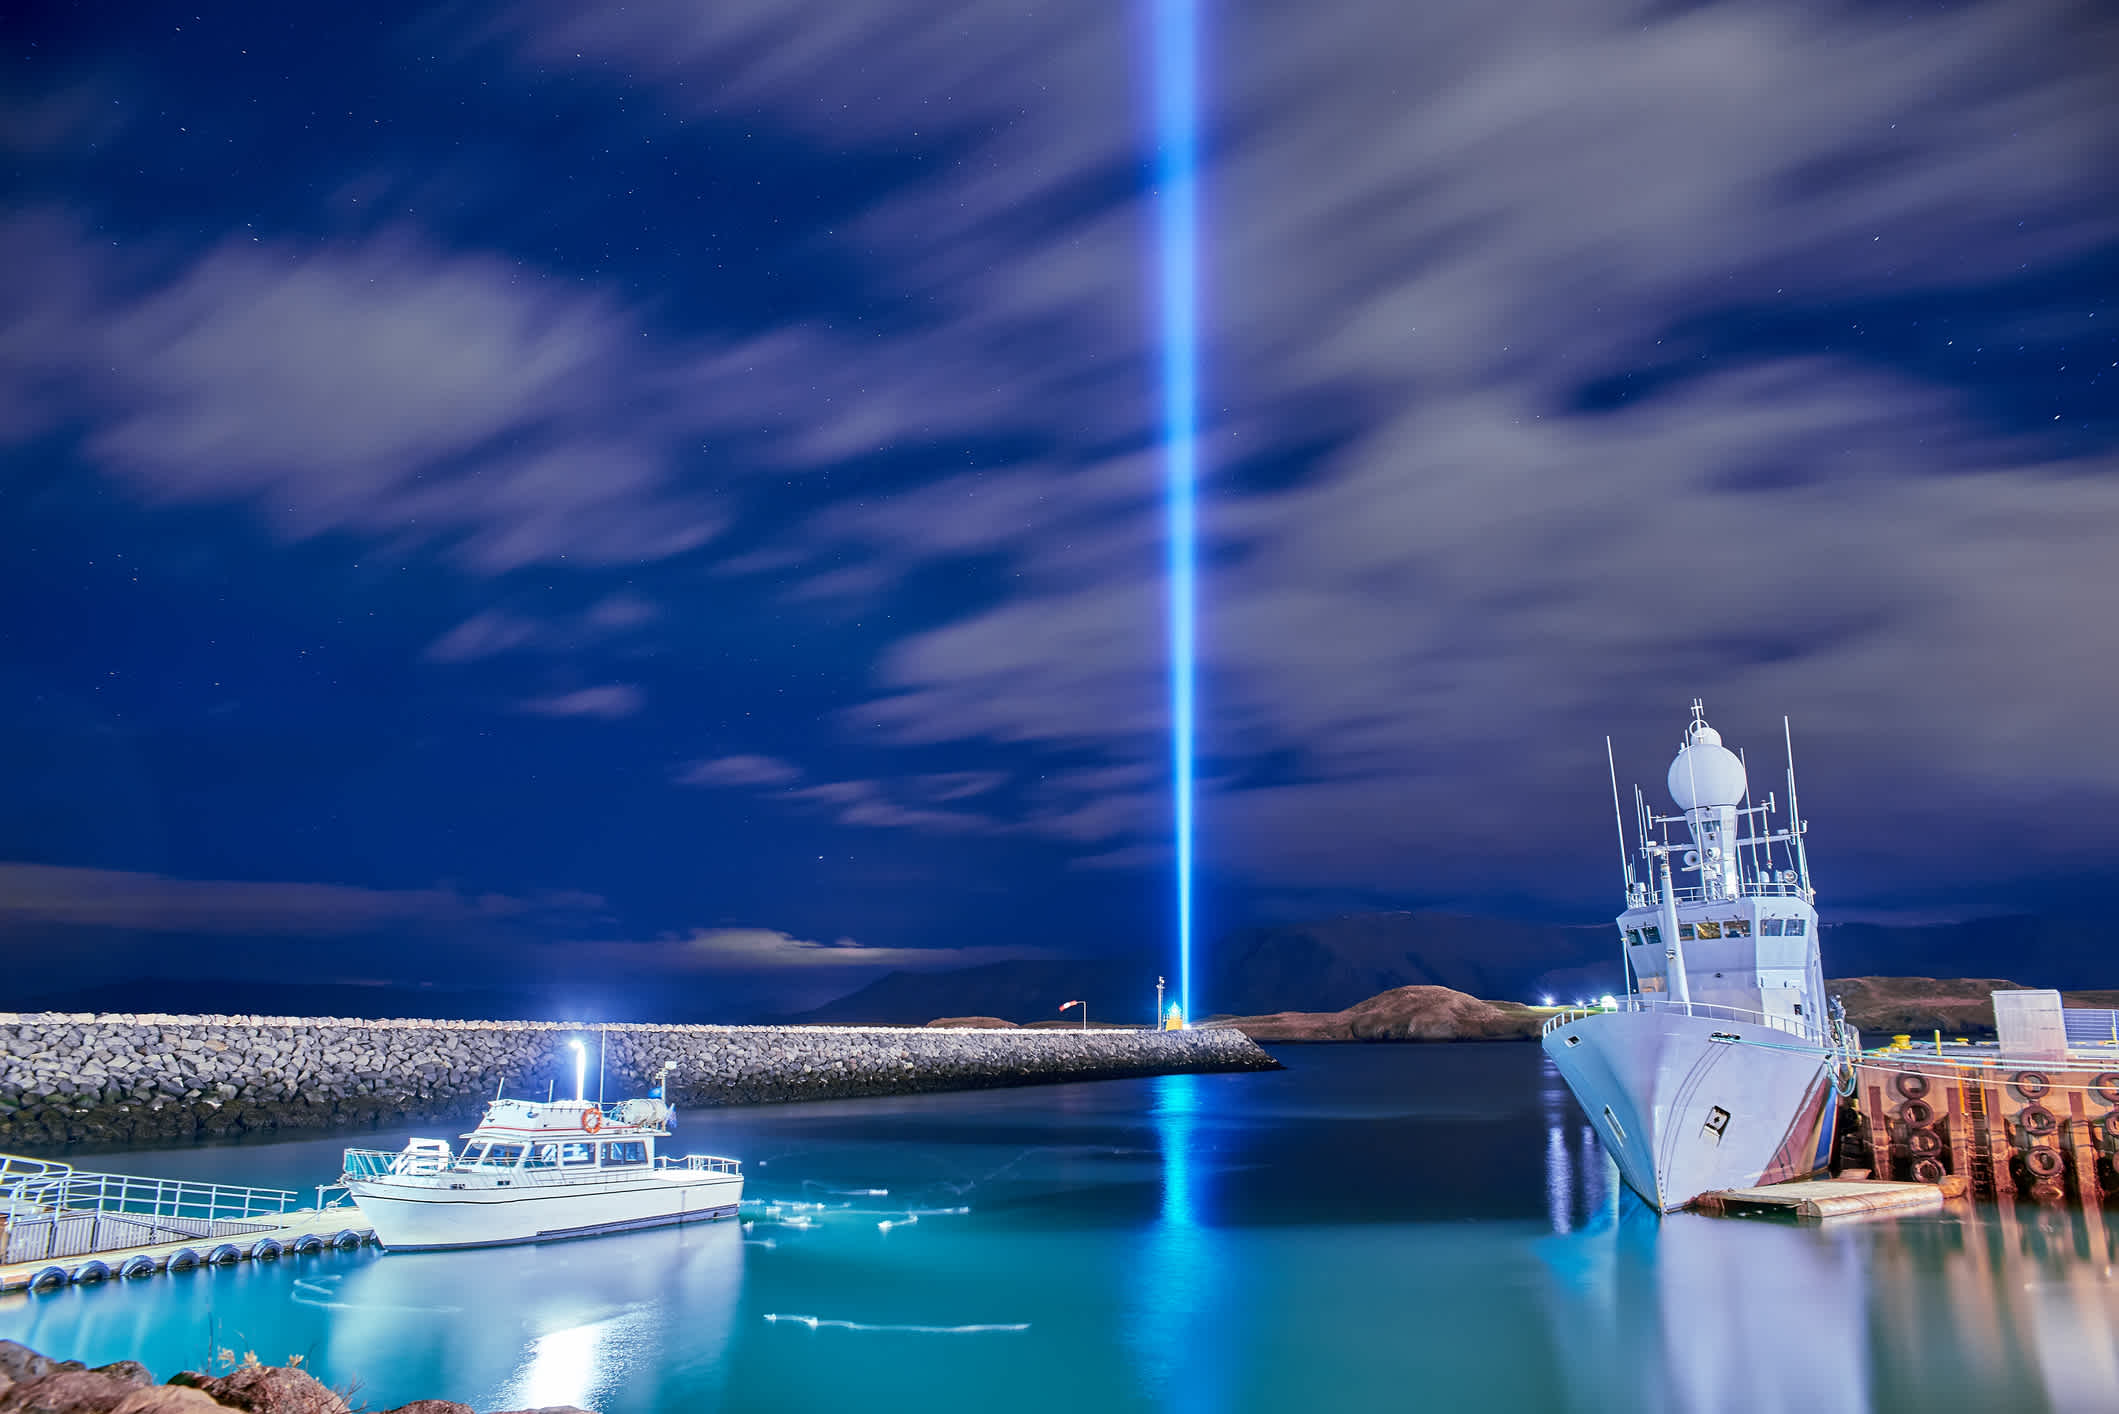 La vue sur le célèbre phare de Yoko Ono, la 'Imagine Peace Tower', île de Viðey, Islande.